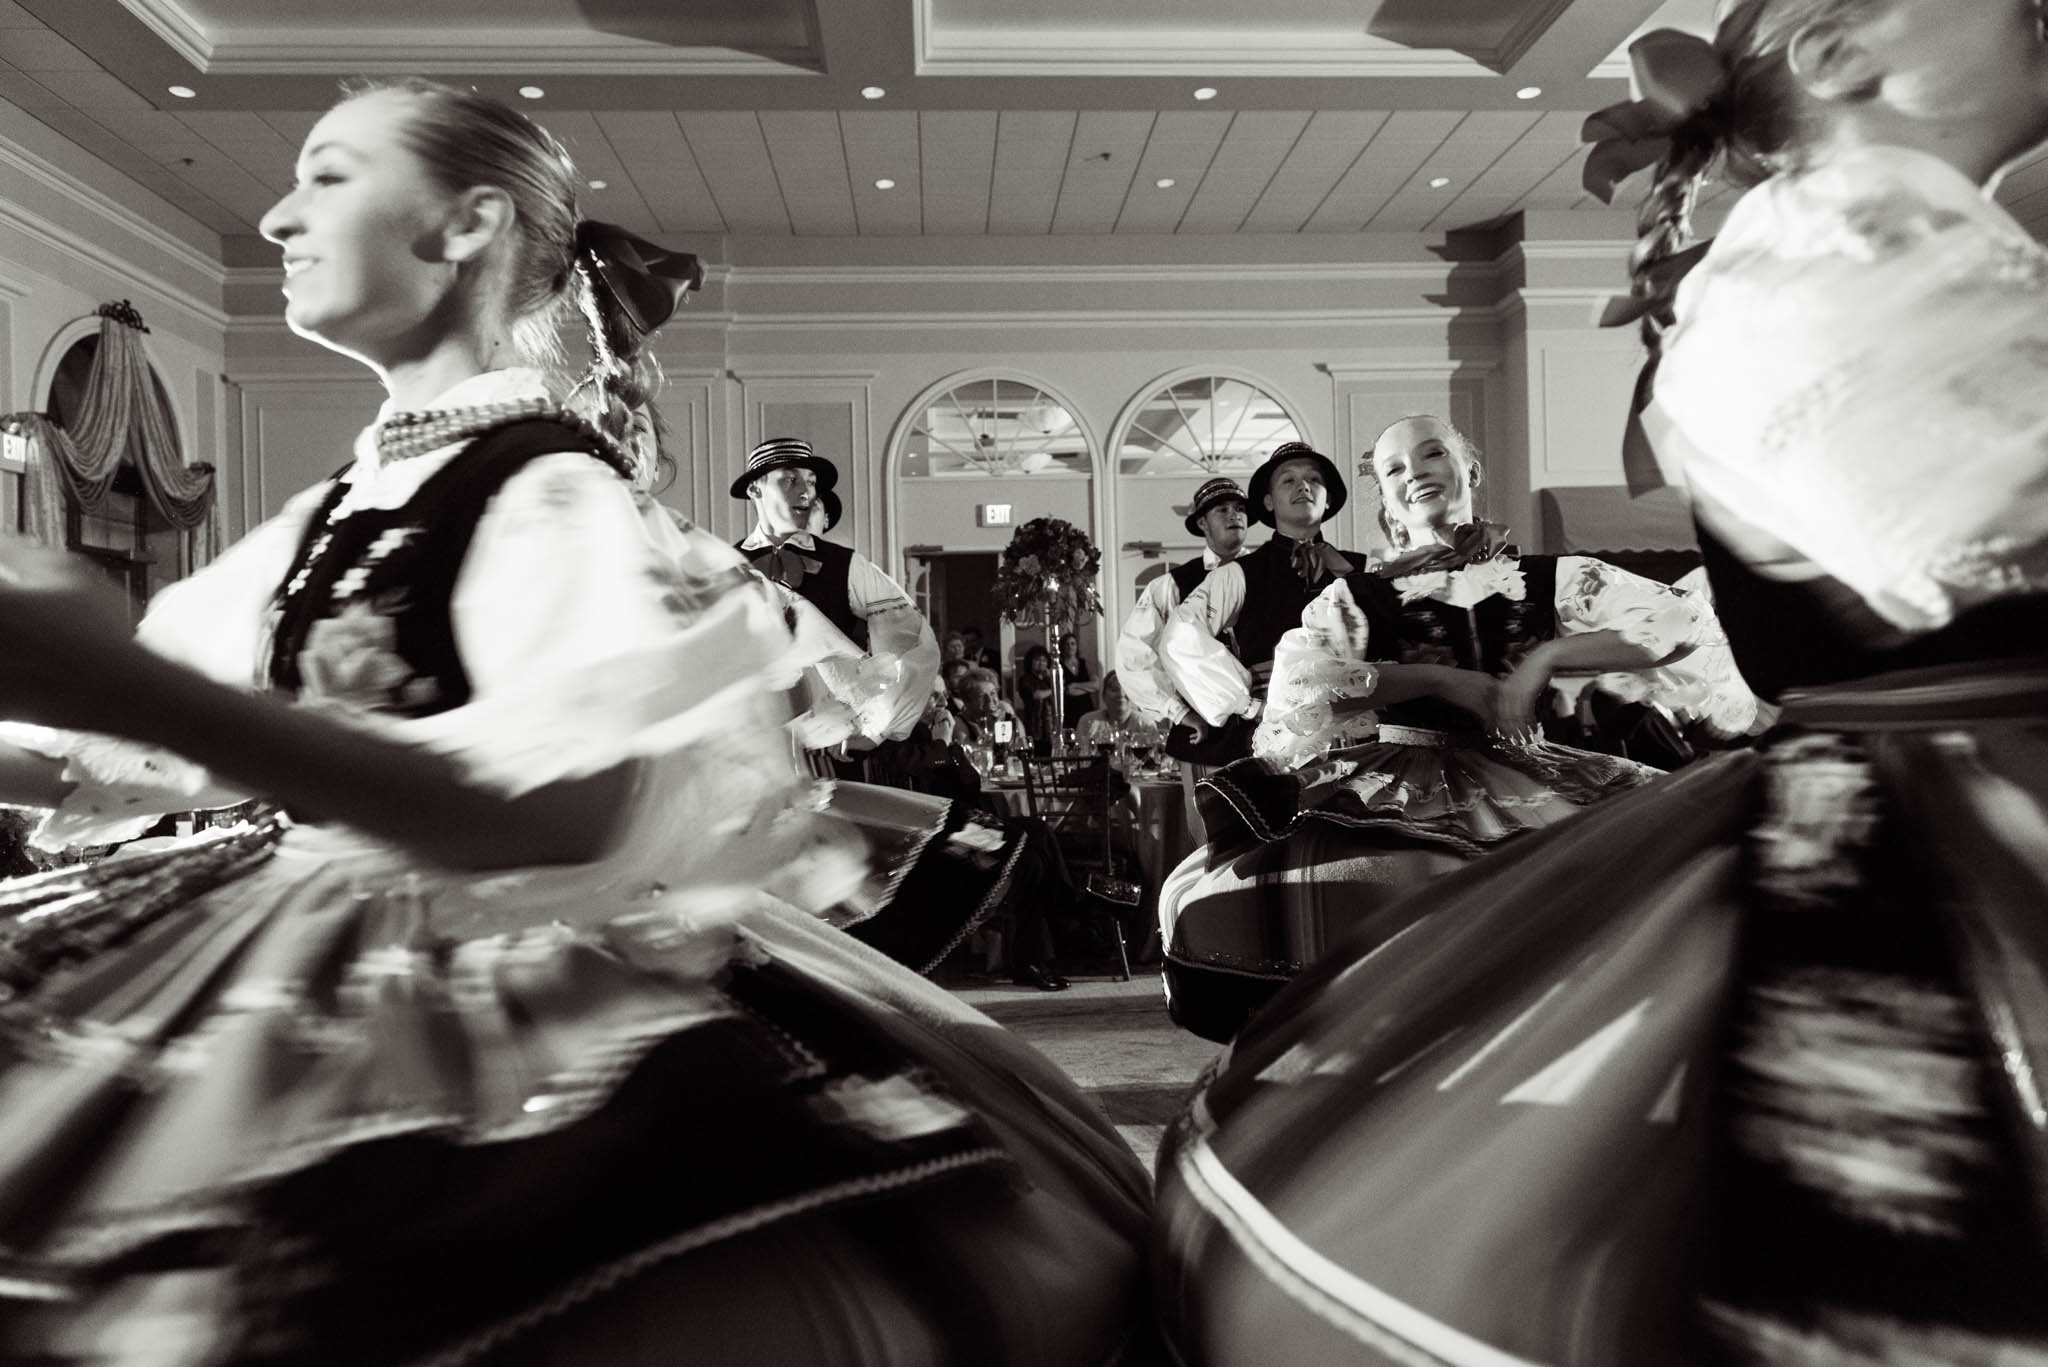 Traditional folk Polish dance group performing at a wedding